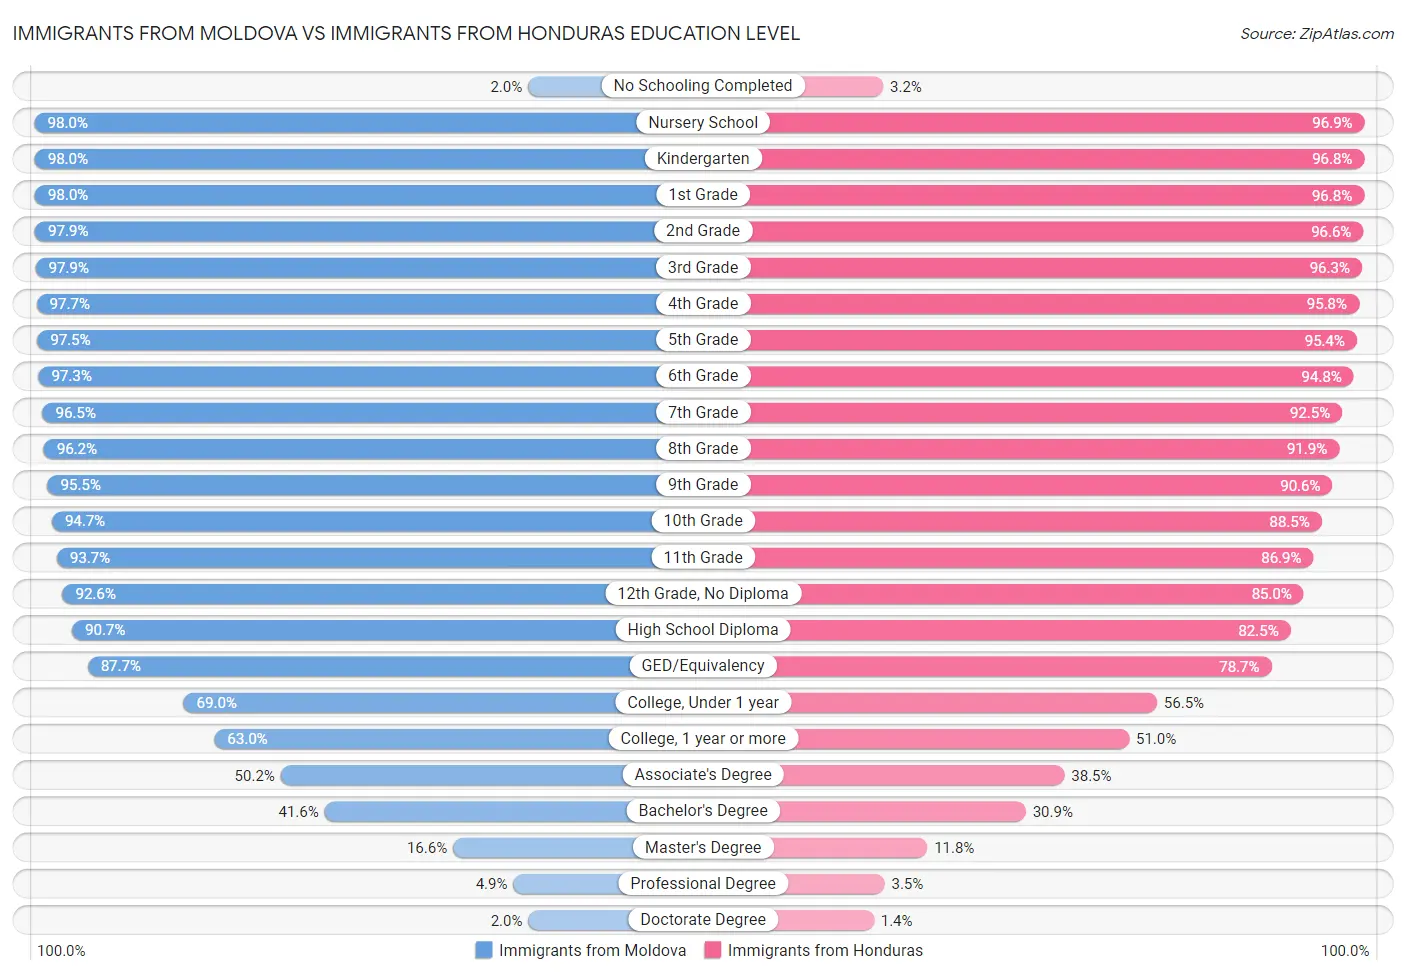 Immigrants from Moldova vs Immigrants from Honduras Education Level